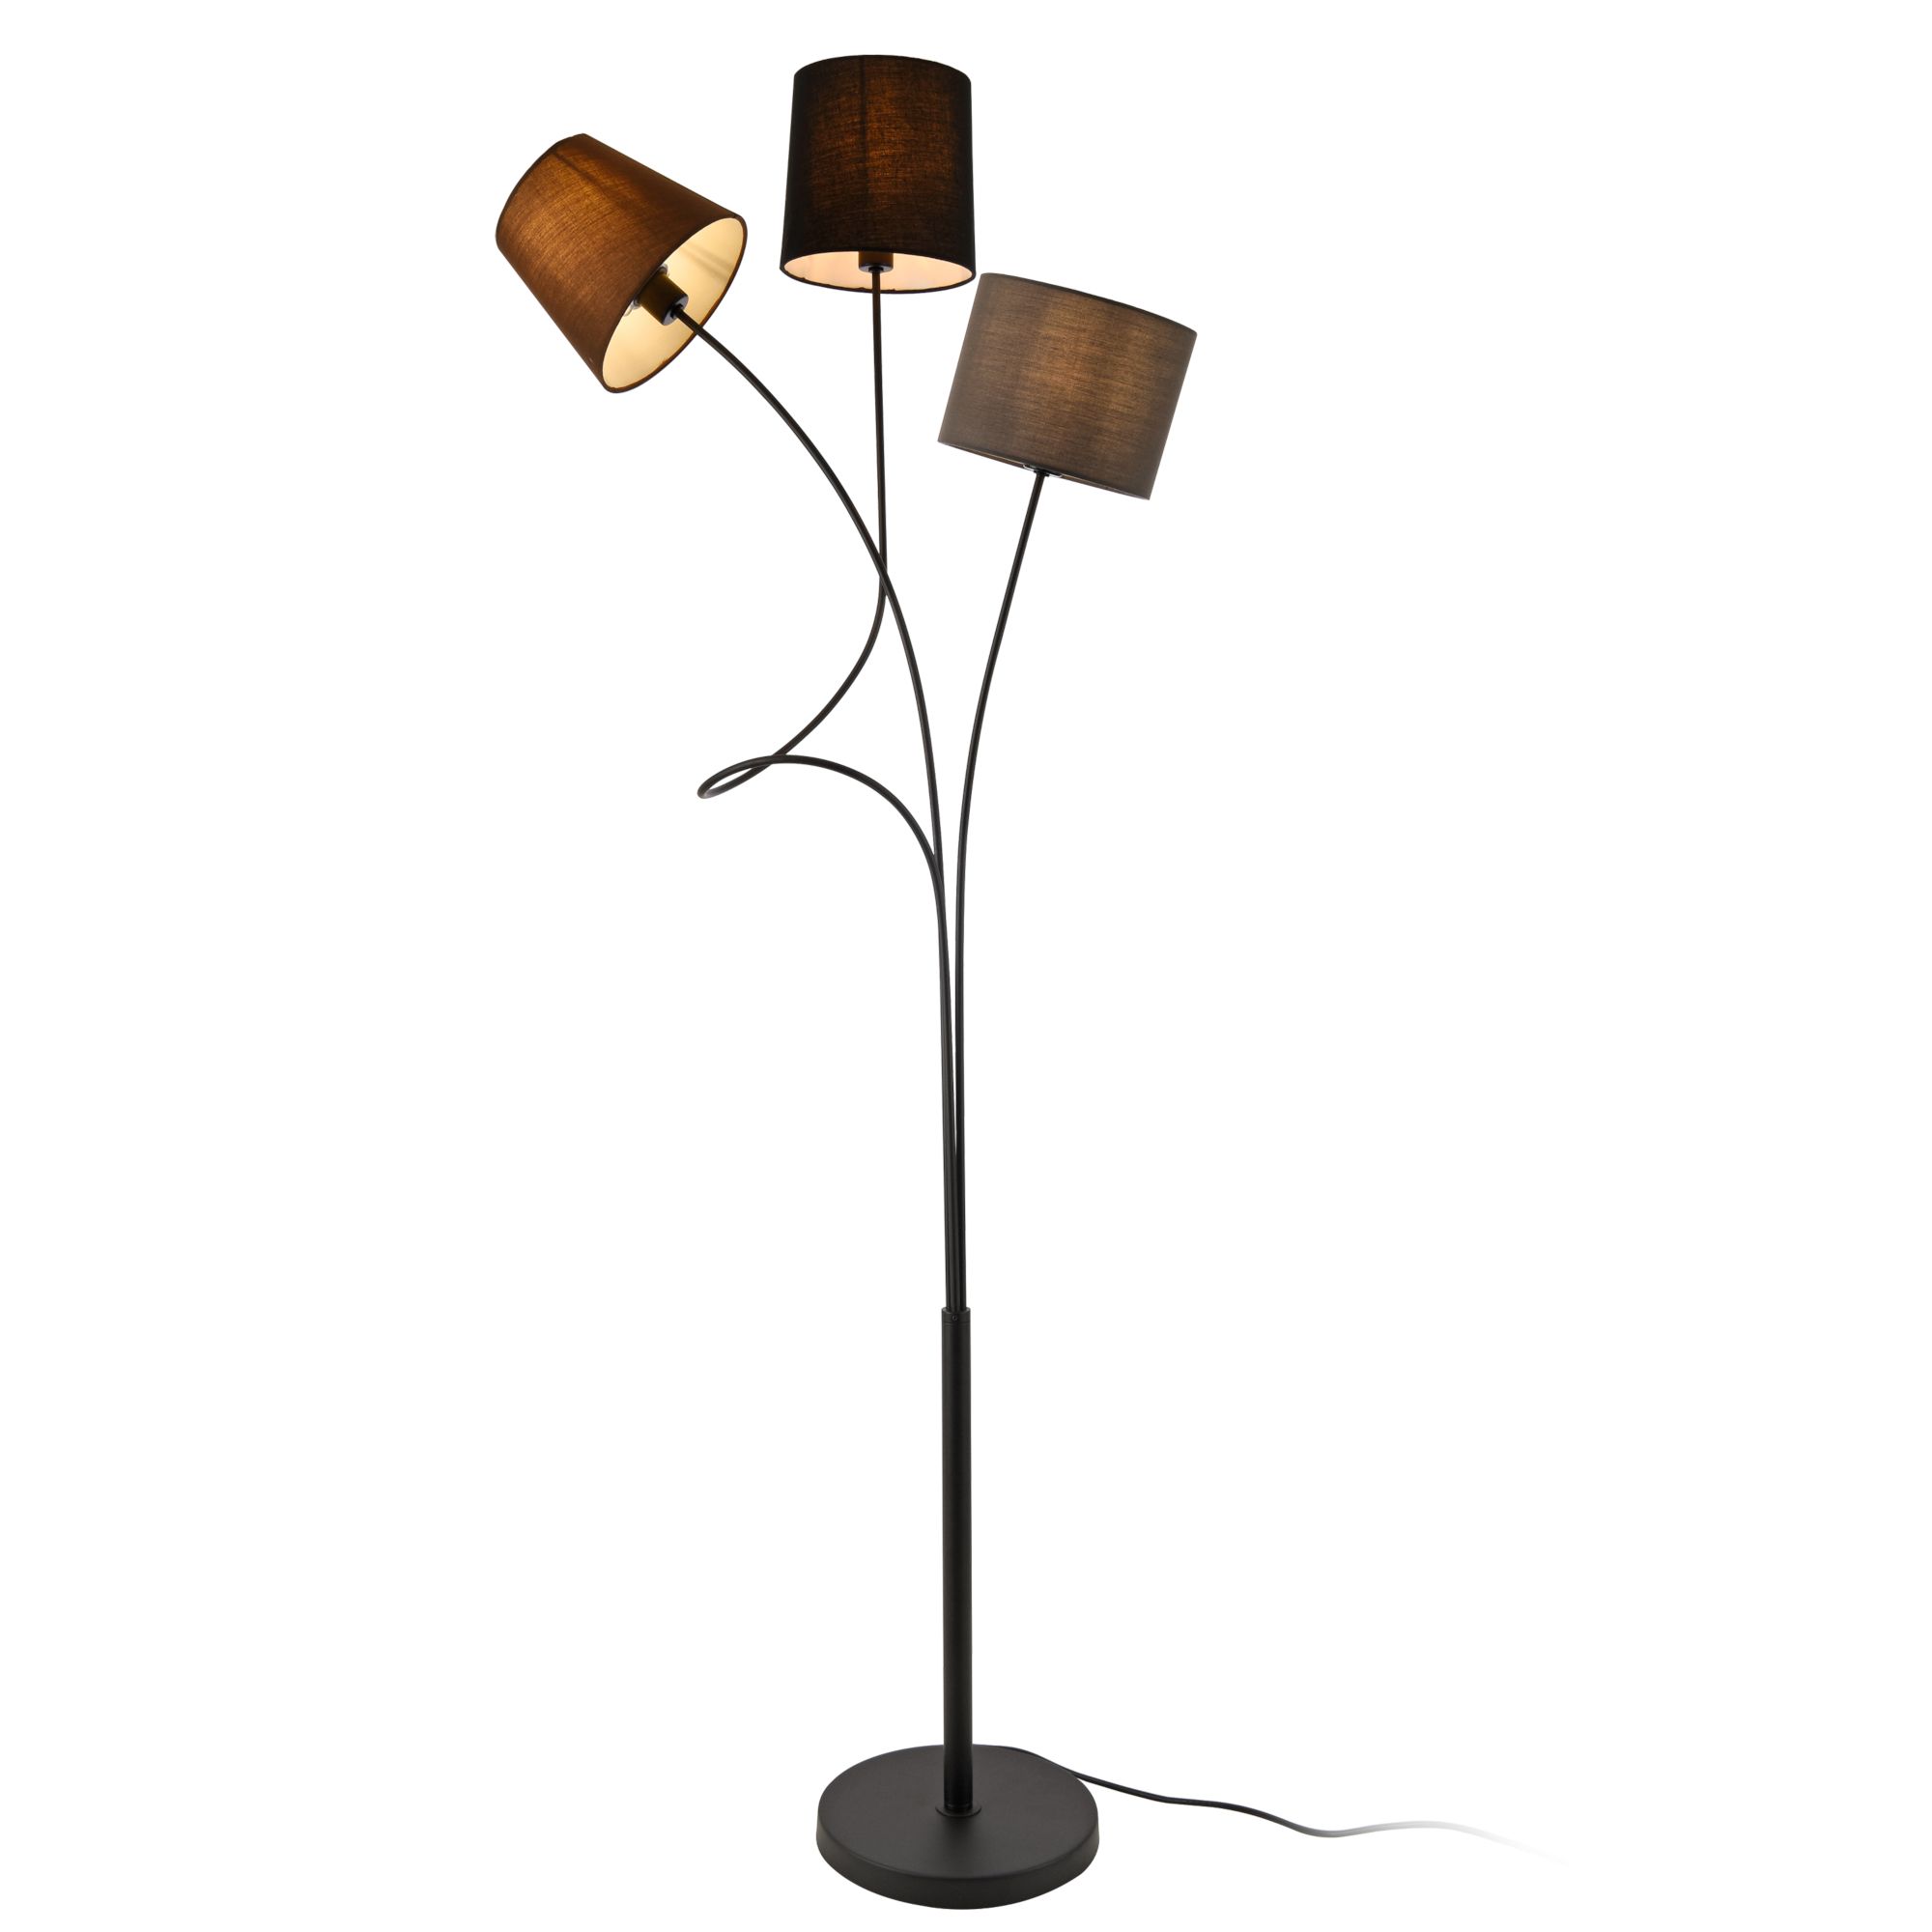 [lux.pro] Stojací lampa \"Treviso\" HT191011 - H.T. Trade Service GmbH & Co. KG